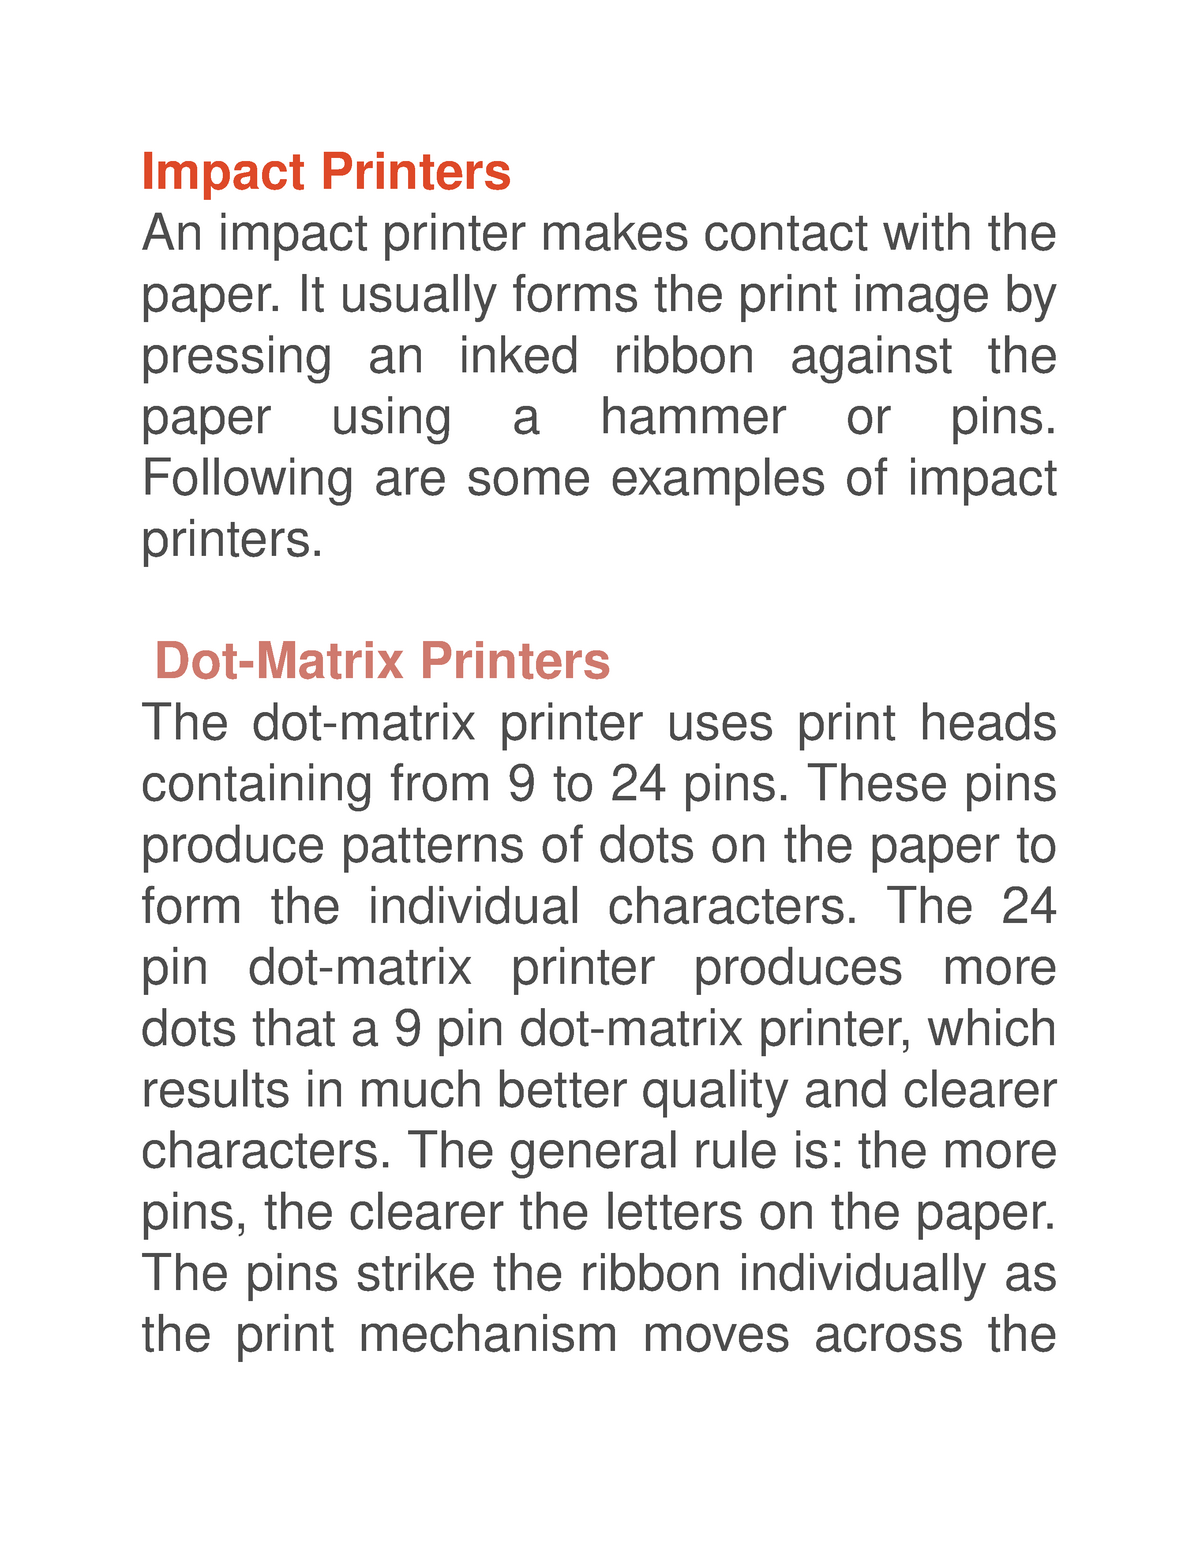 non impact printers examples